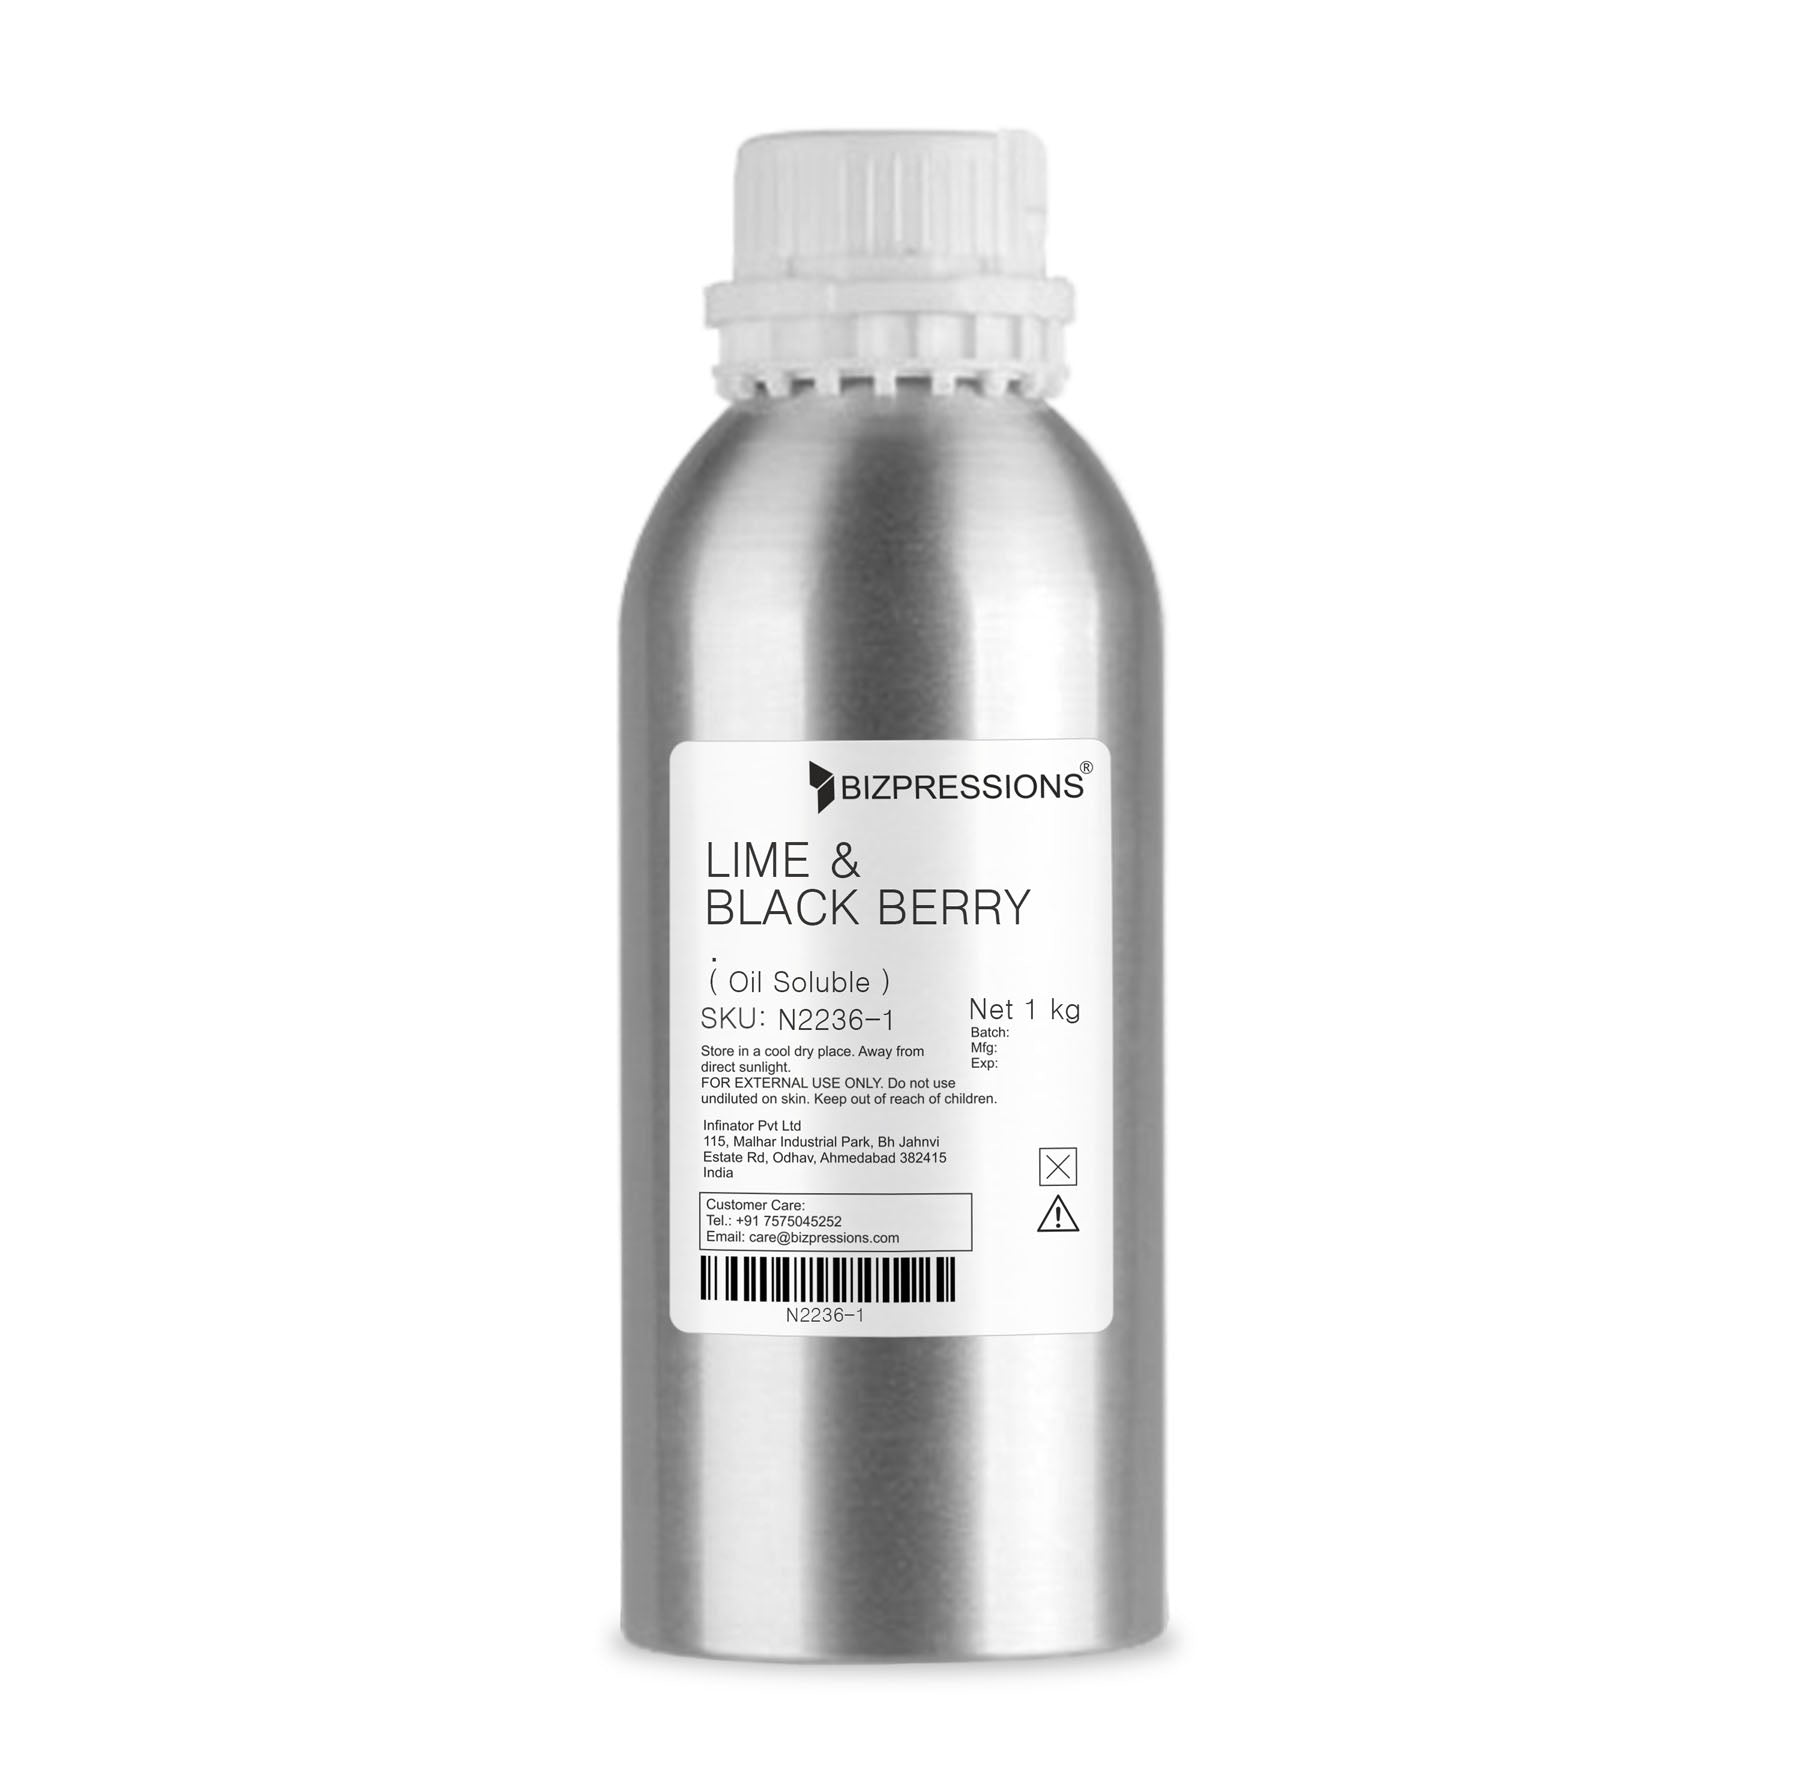 LIME & BLACK BERRY - Fragrance ( Oil Soluble ) - 1 kg